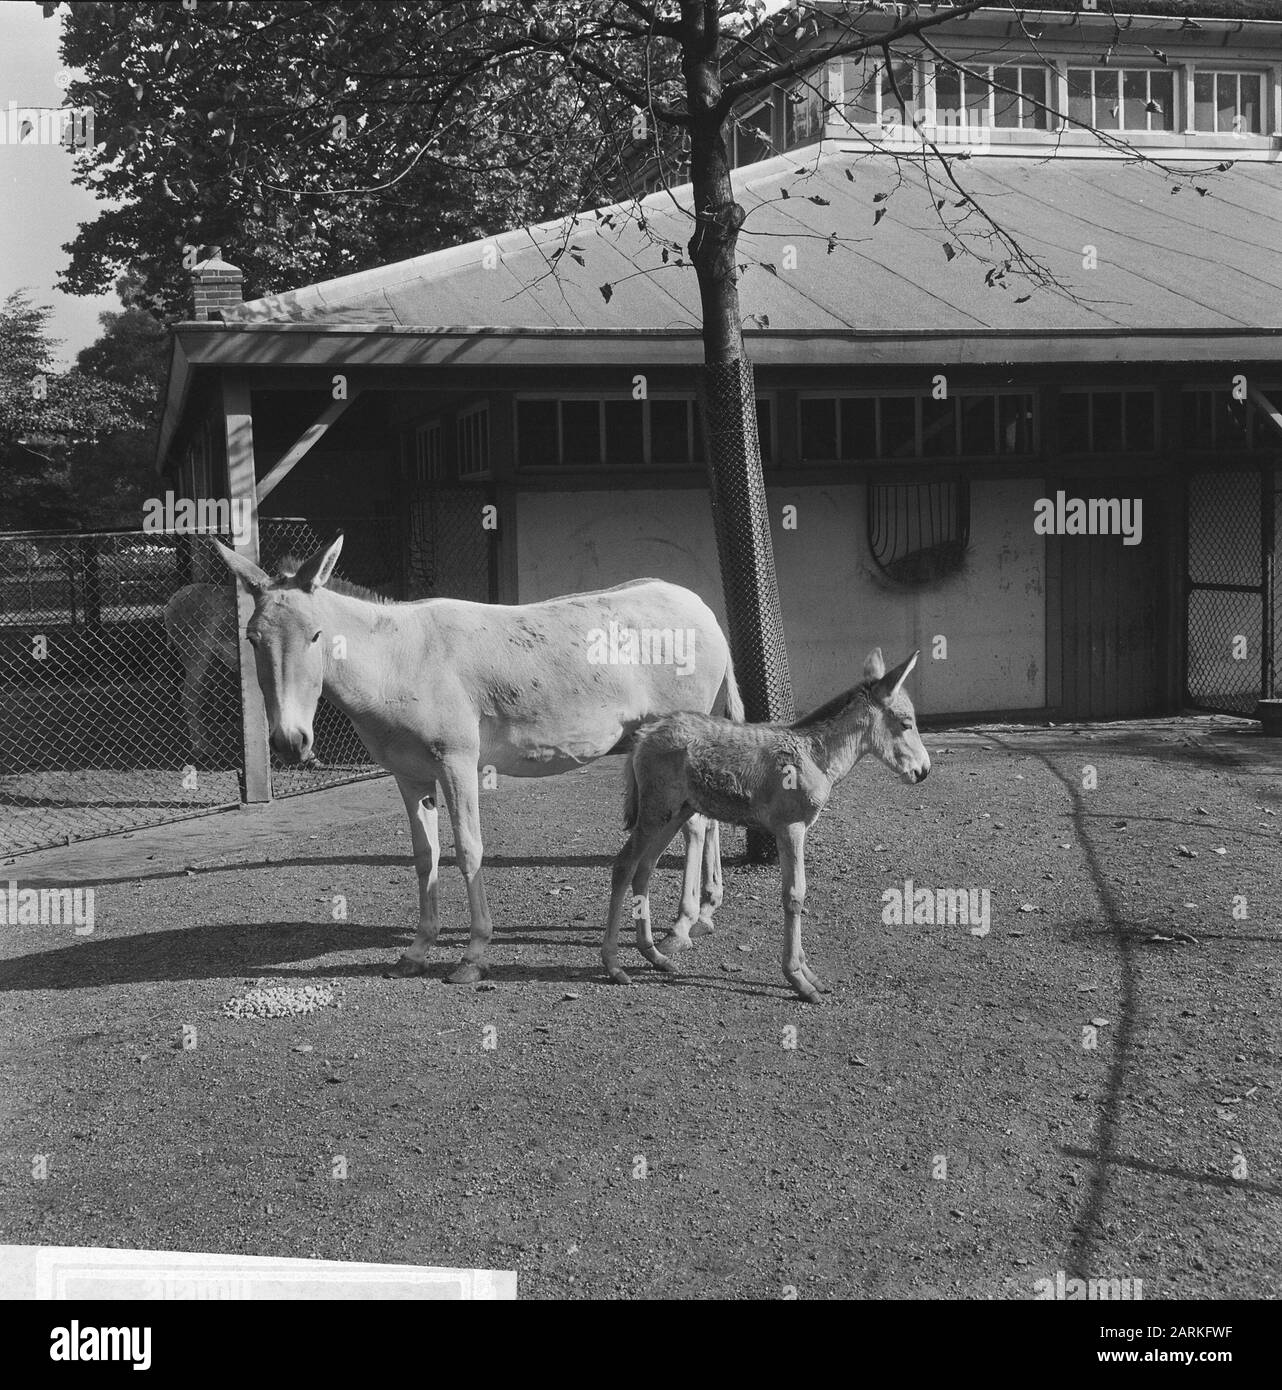 Half donkey (Onager) in Artis Date: September 20, 1965 Institution name: Artis Stock Photo